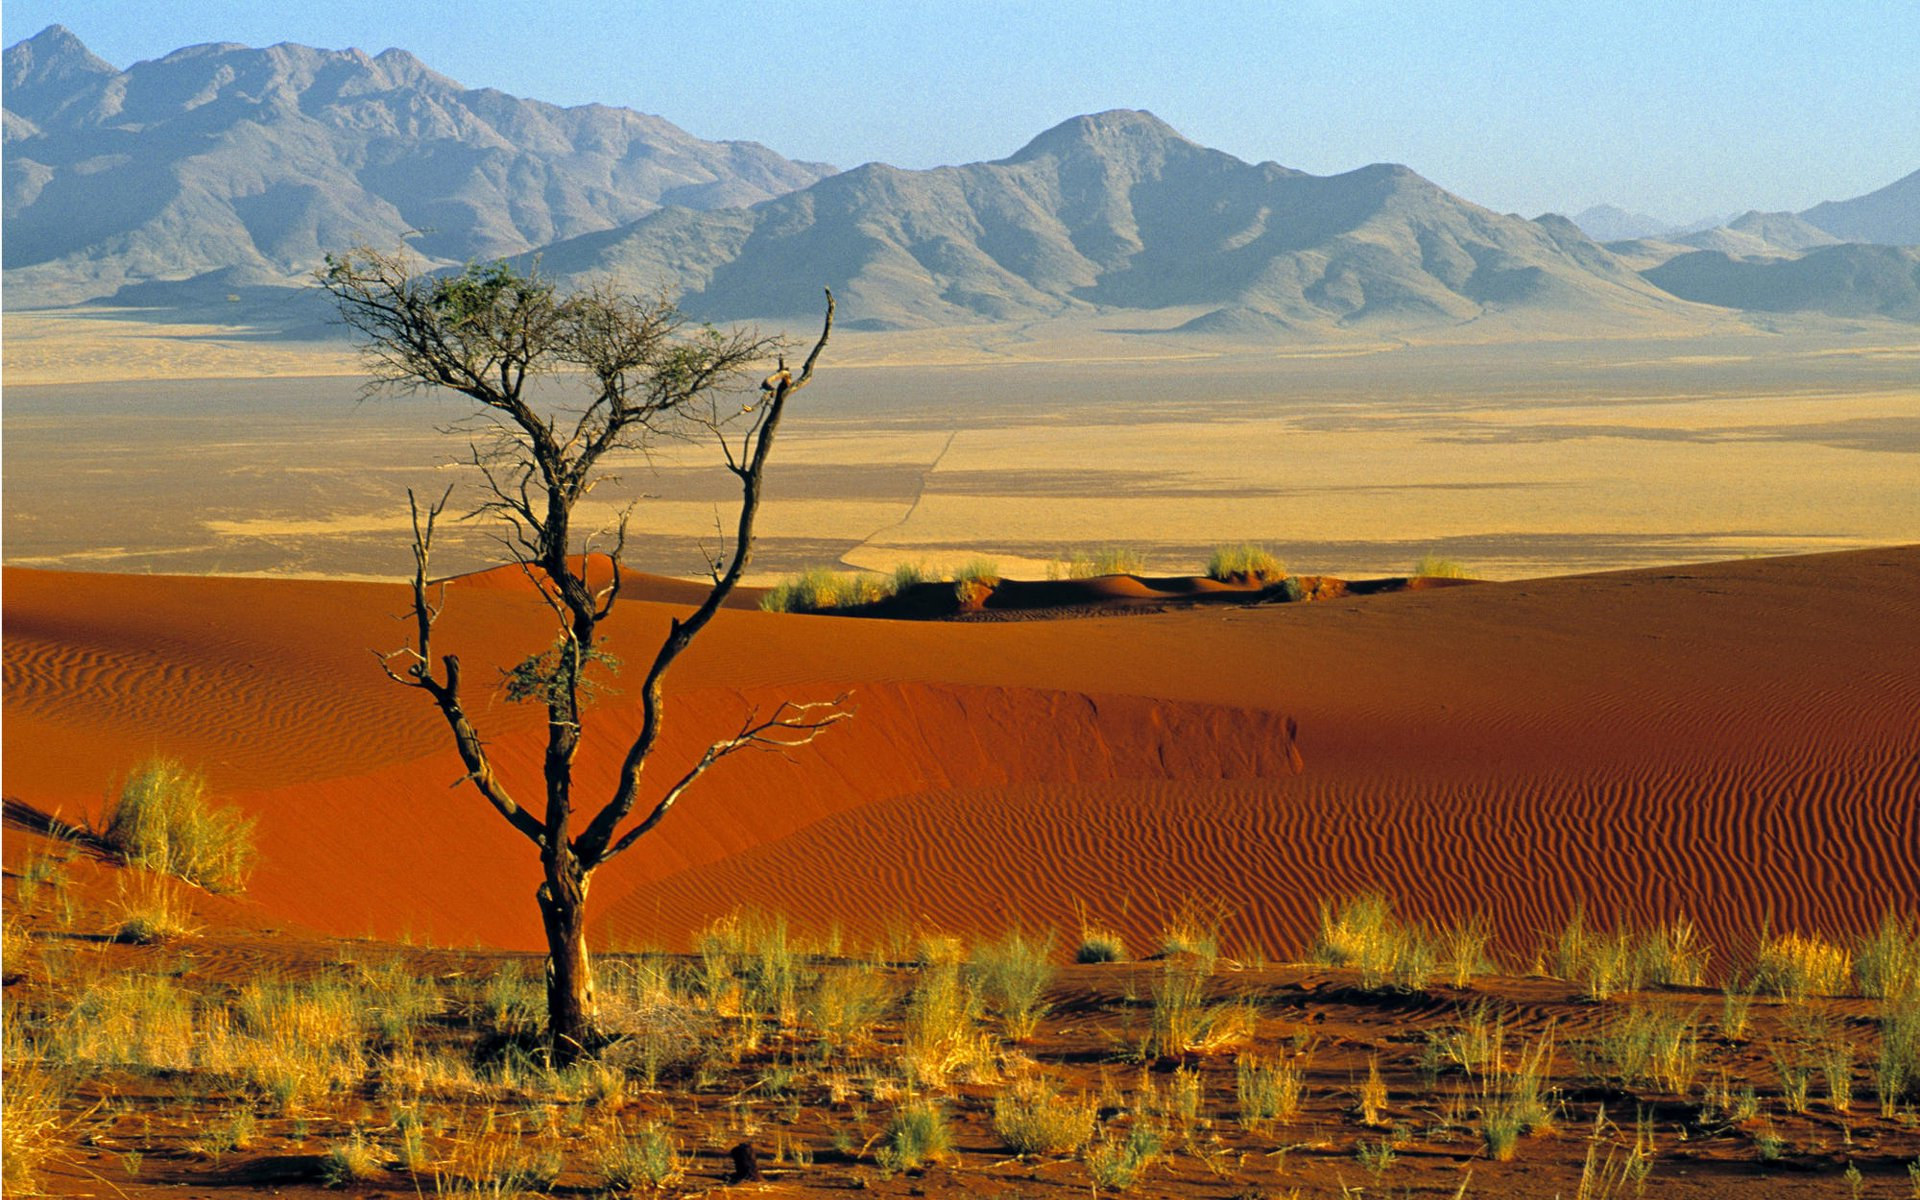 A honeymoon experience at the NamidRand Reserve, Namibia